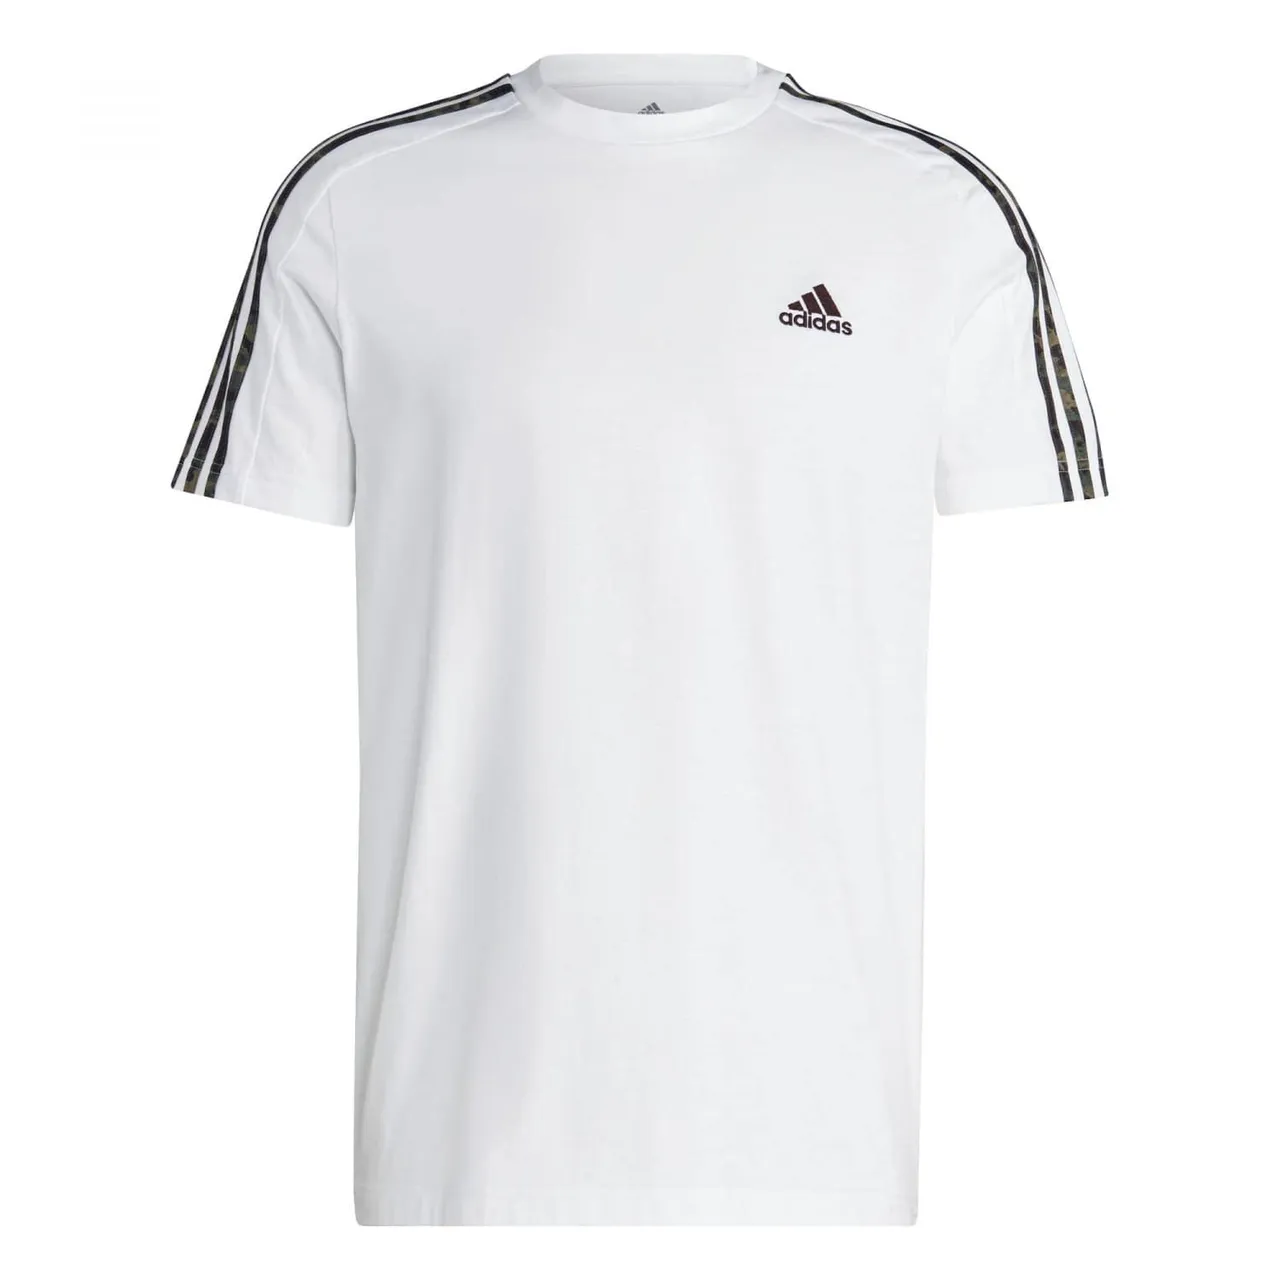 Adidas, Essentials Single Jersey 3-Stripes, T-Shirt,